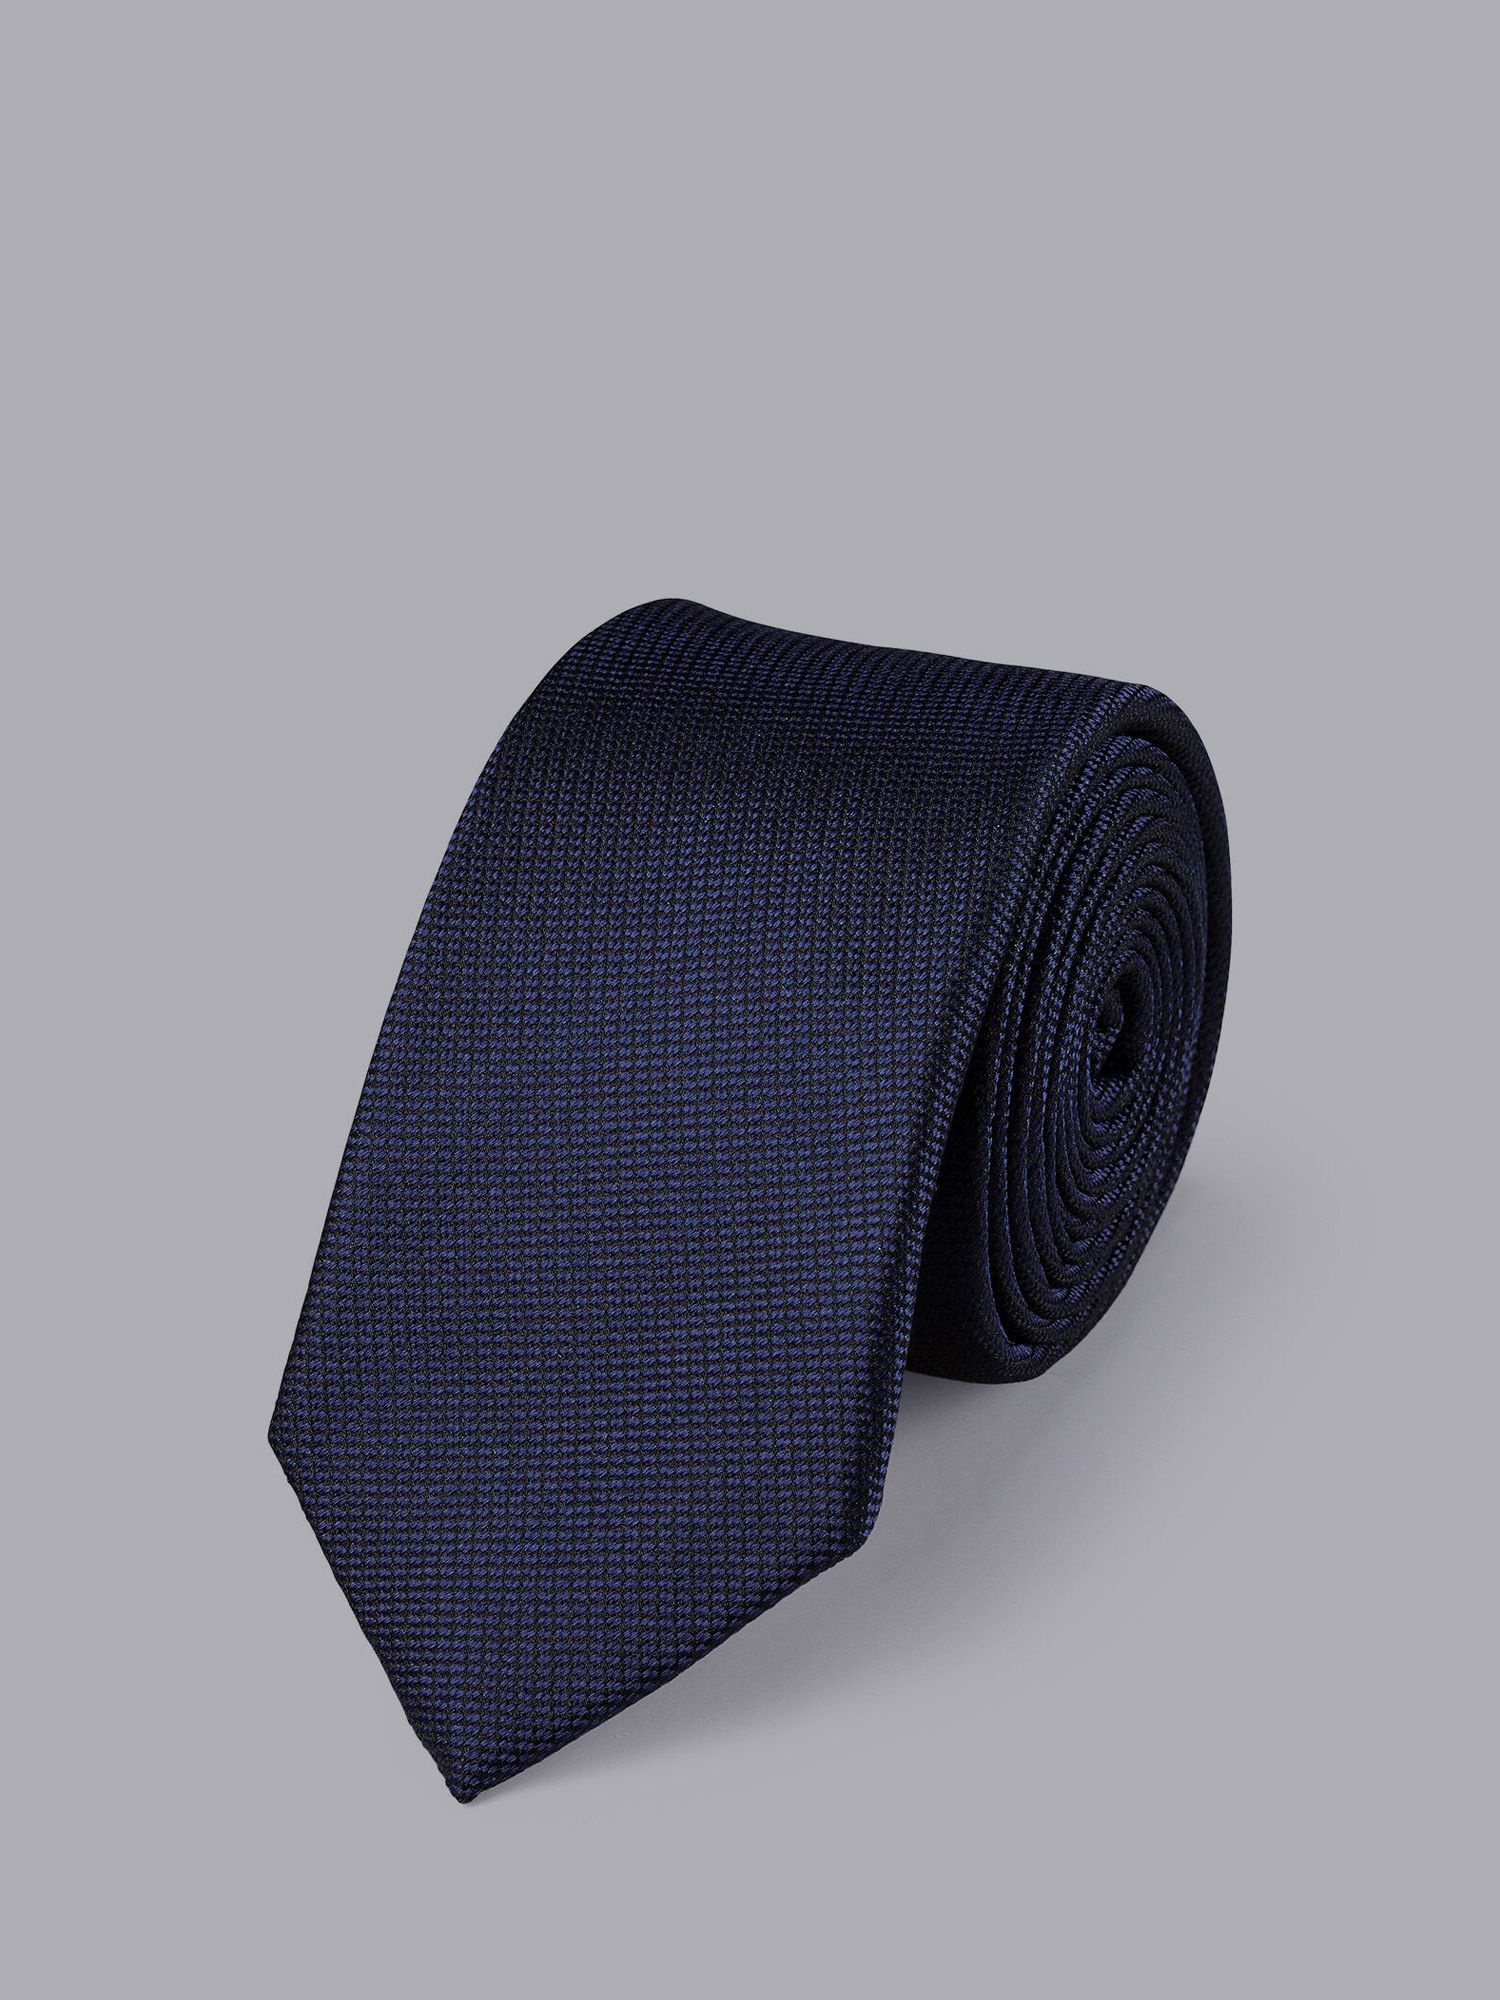 Charles Tyrwhitt Stain Resistant Slim Silk Tie, French Blue, One size